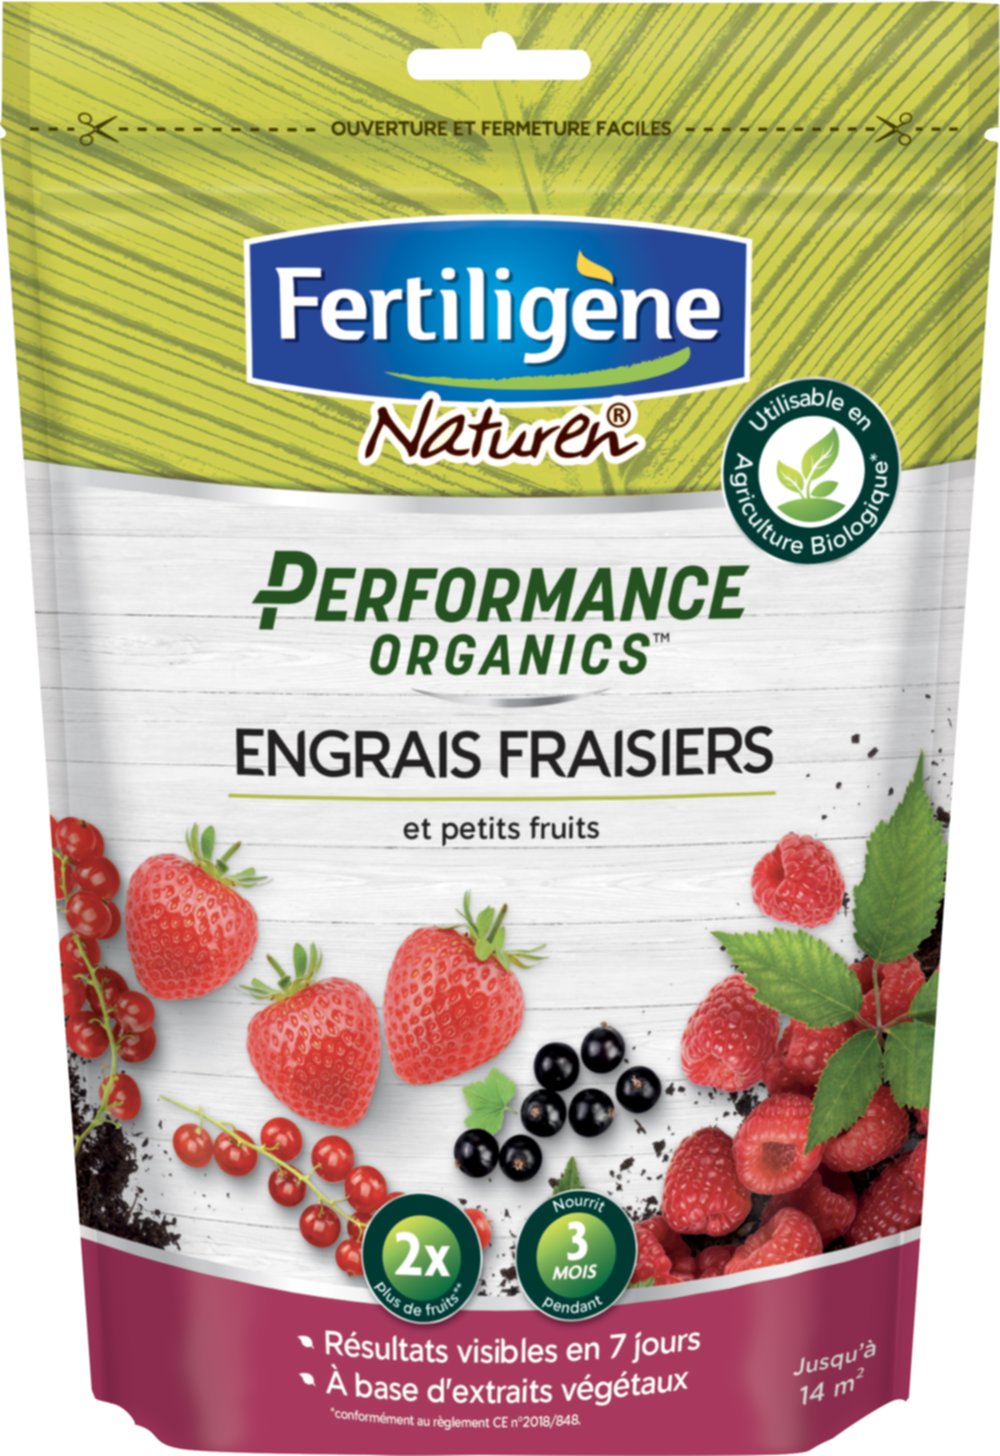 Performance organics Engrais fraisiers er petits fruits uab 700g